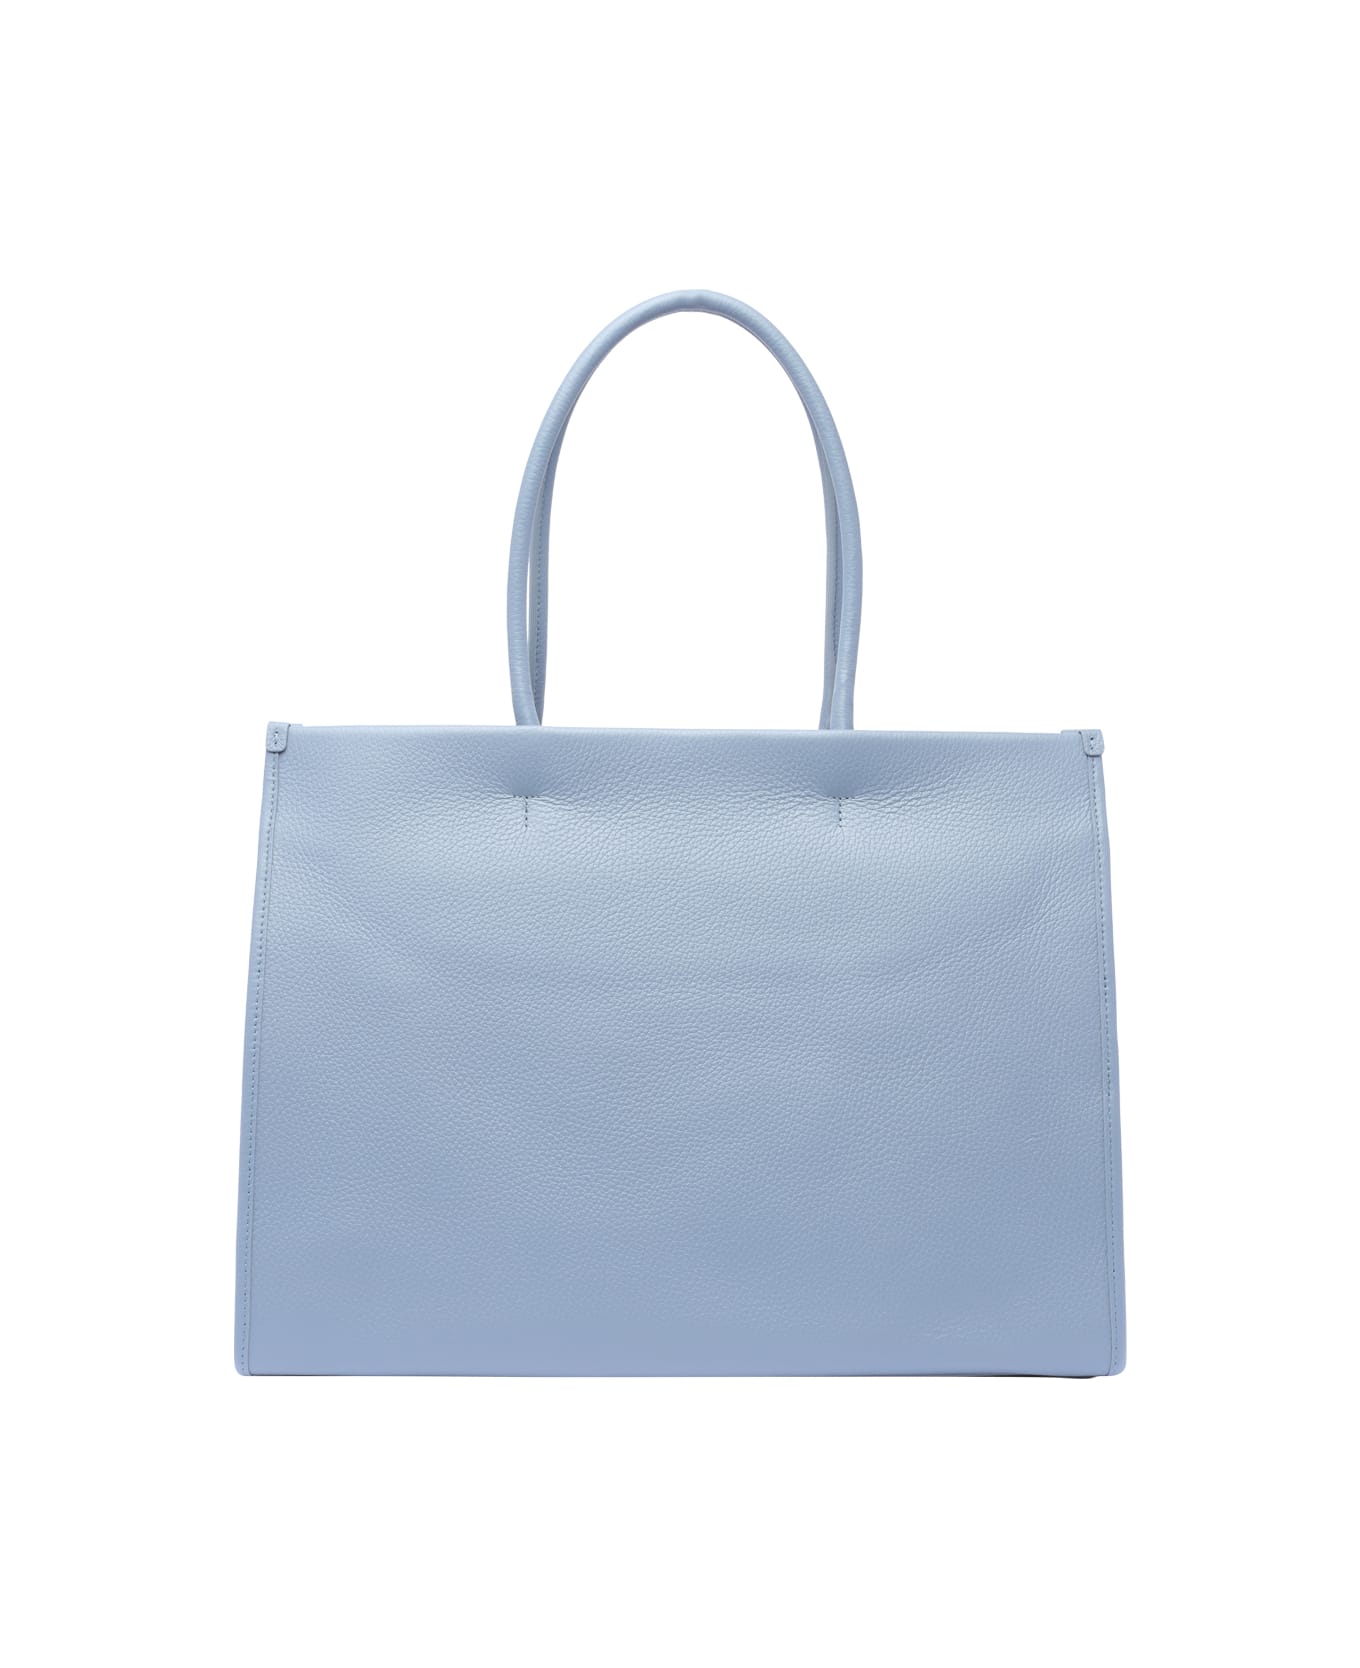 Furla Opportunity Tote Bag - Blue